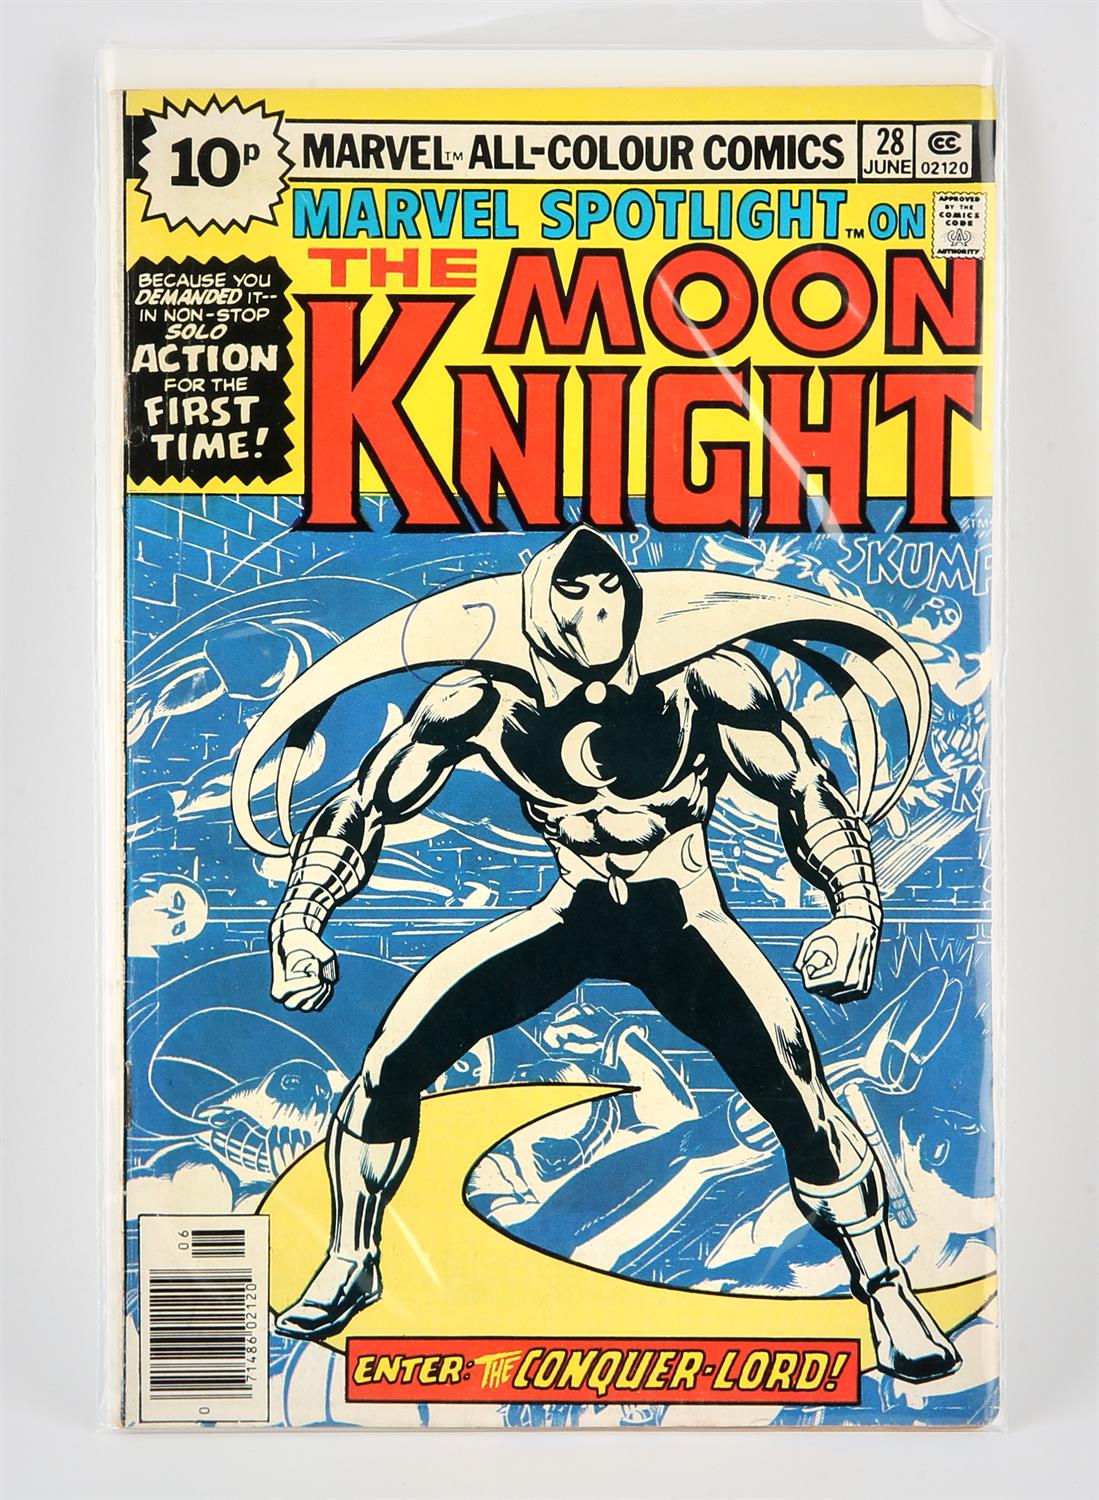 Marvel Comics: Marvel spotlight on Moon Knight featuring the 1st solo Moon Knight story (1976).